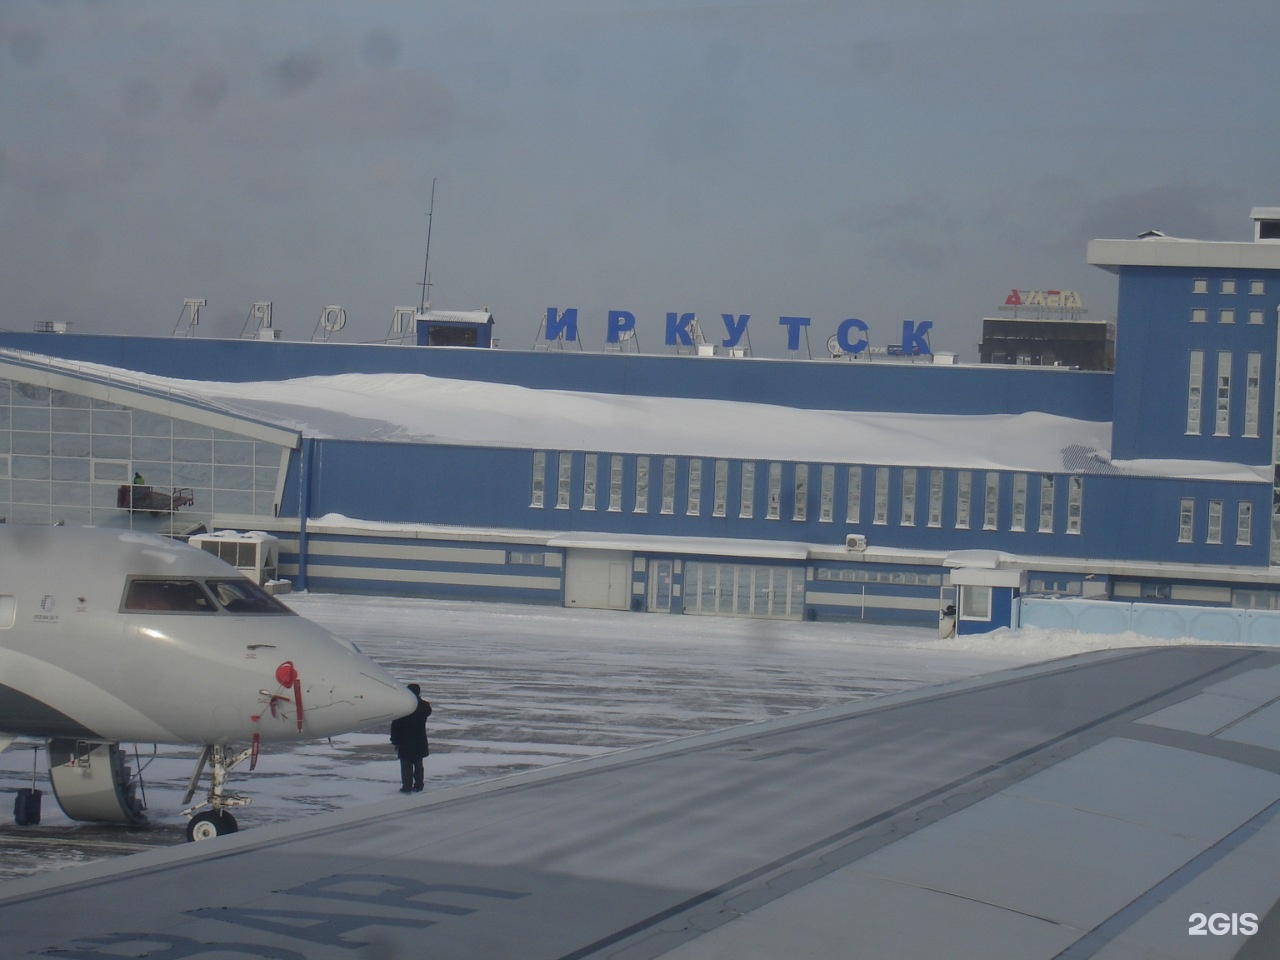 Справочная аэропорта иркутска